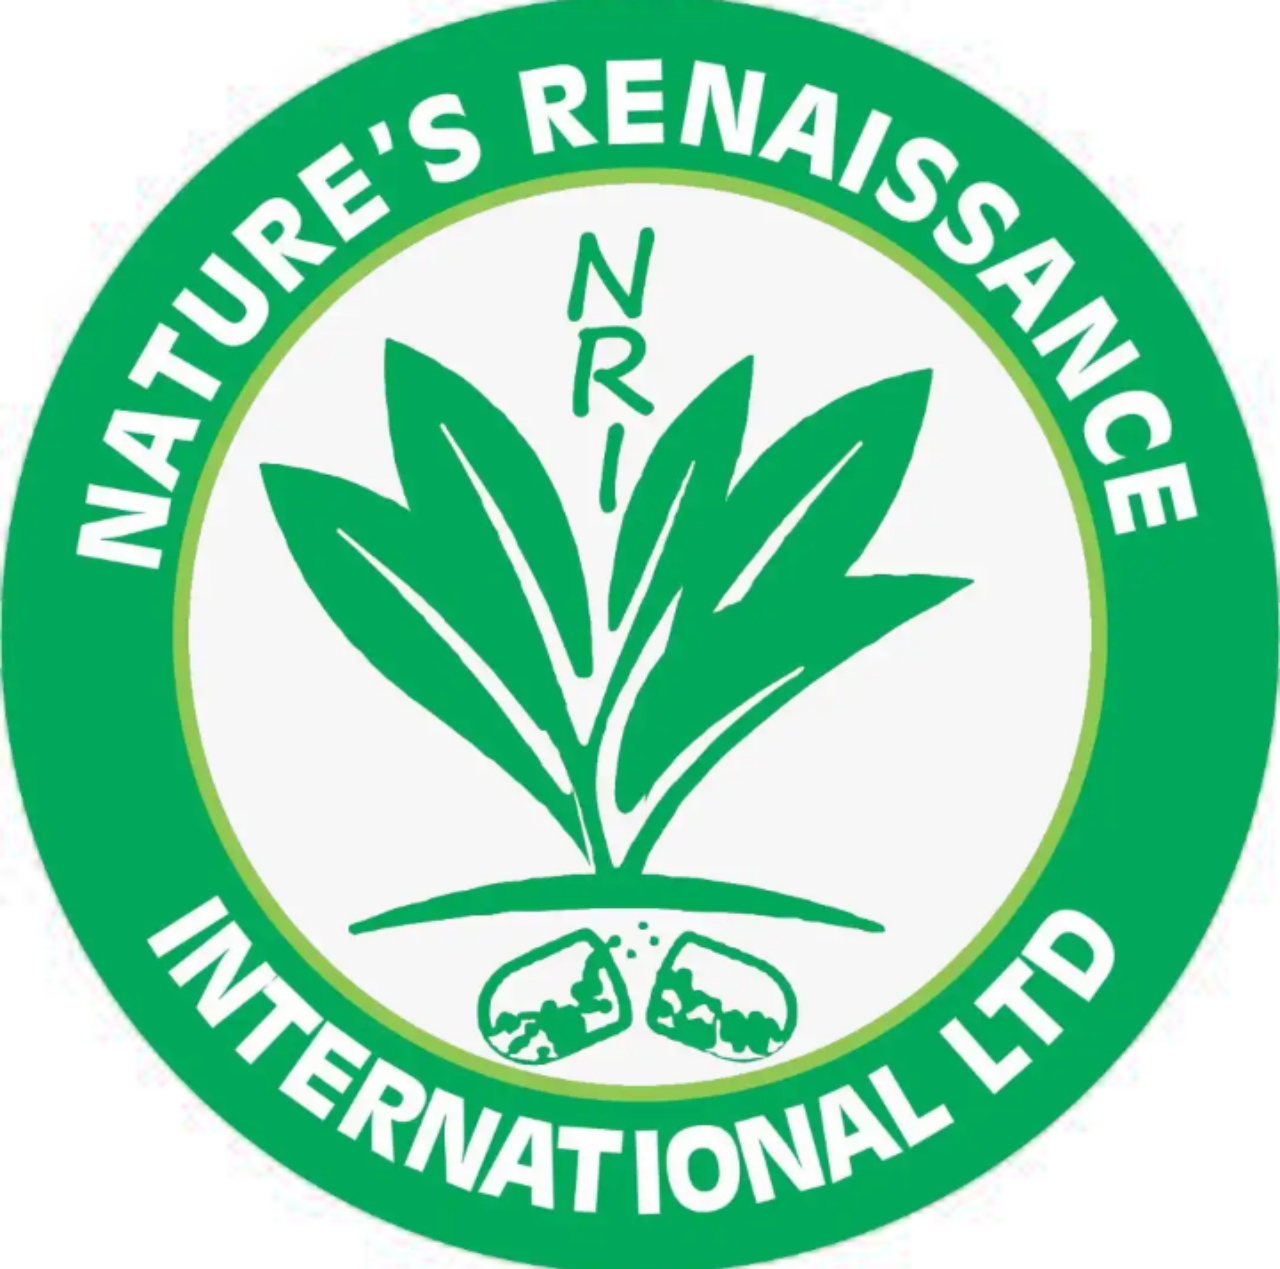 Benefits of Joining Nature's Renaissance International